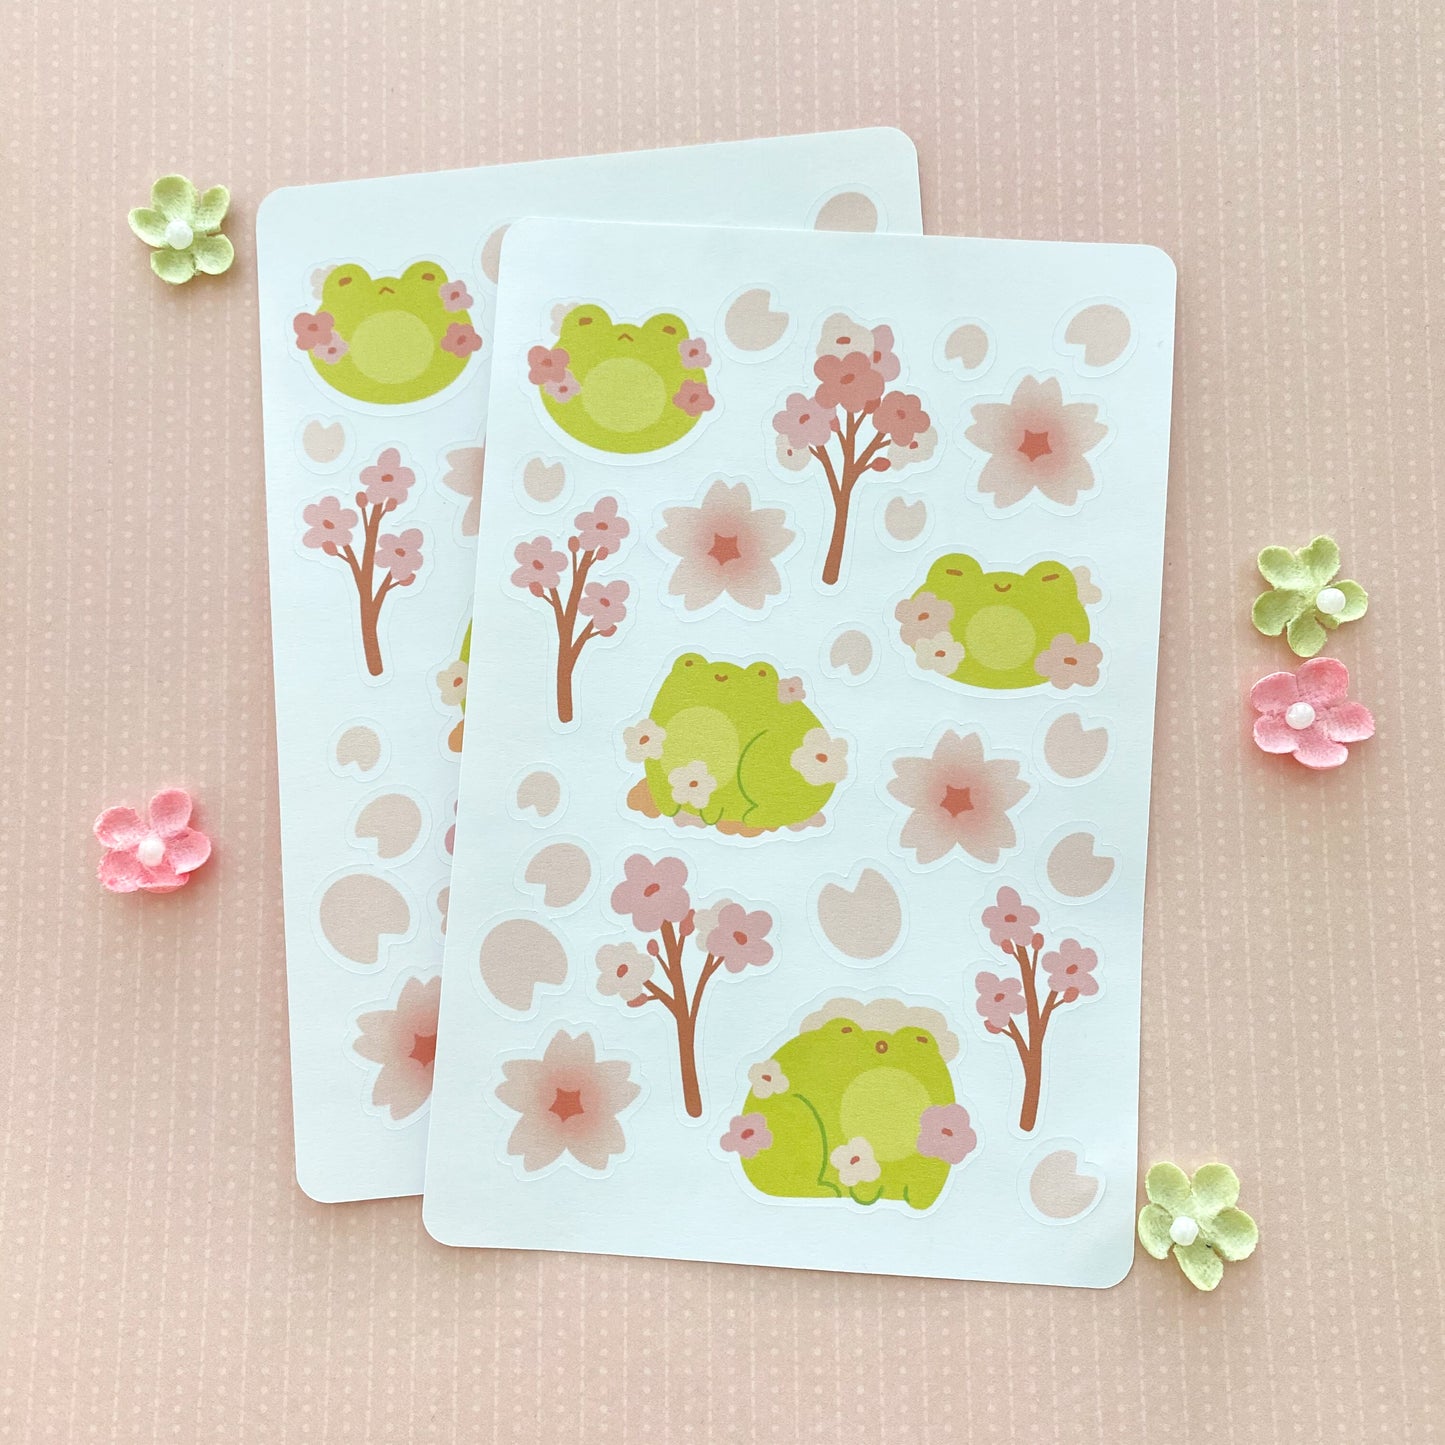 Frog Cherry Blossom Sticker Sheet